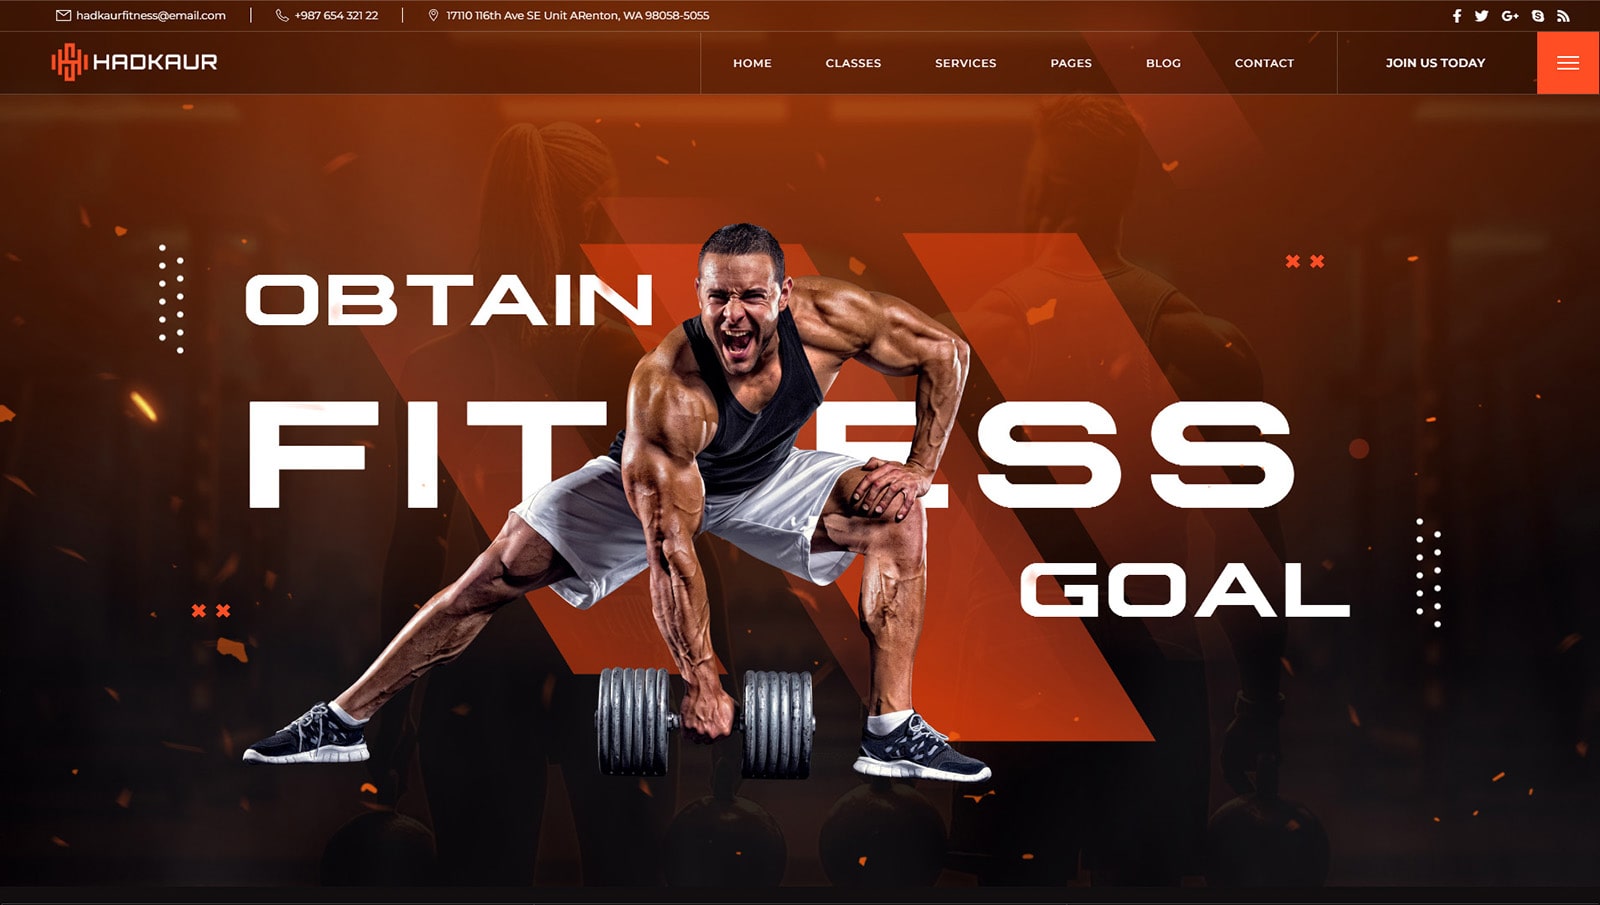 Illustration of Hadkaur, a WordPress theme offering an interactive gym website design.